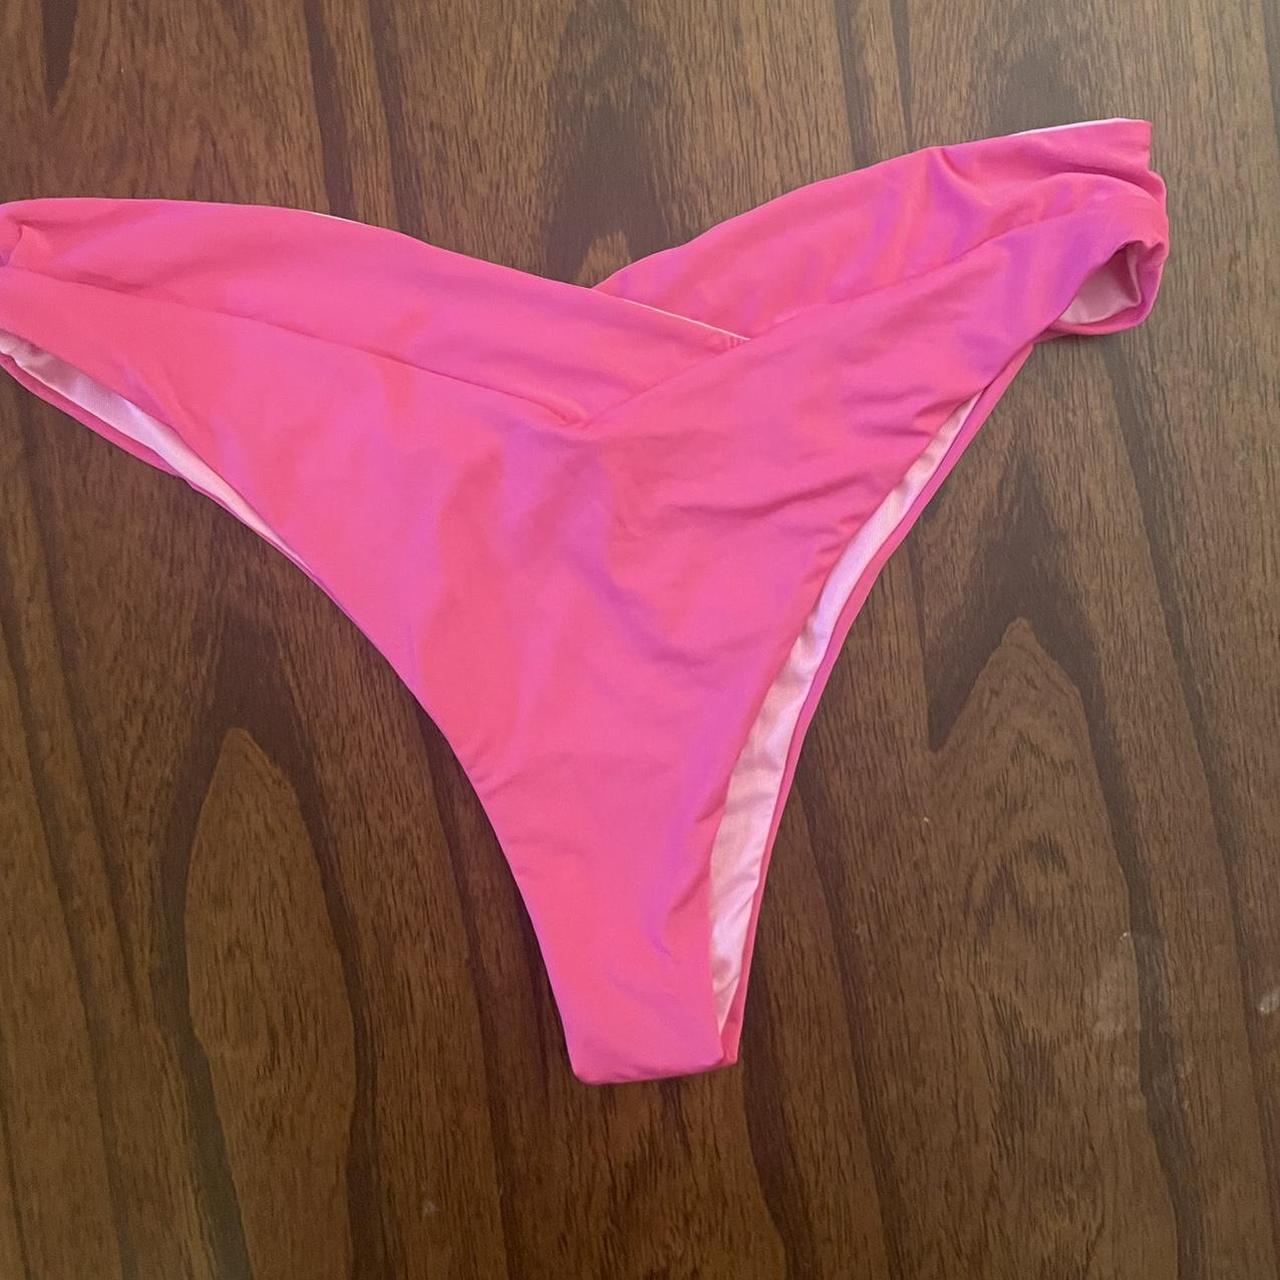 Calzedonia Women's Pink Bikinis-and-tankini-sets (2)